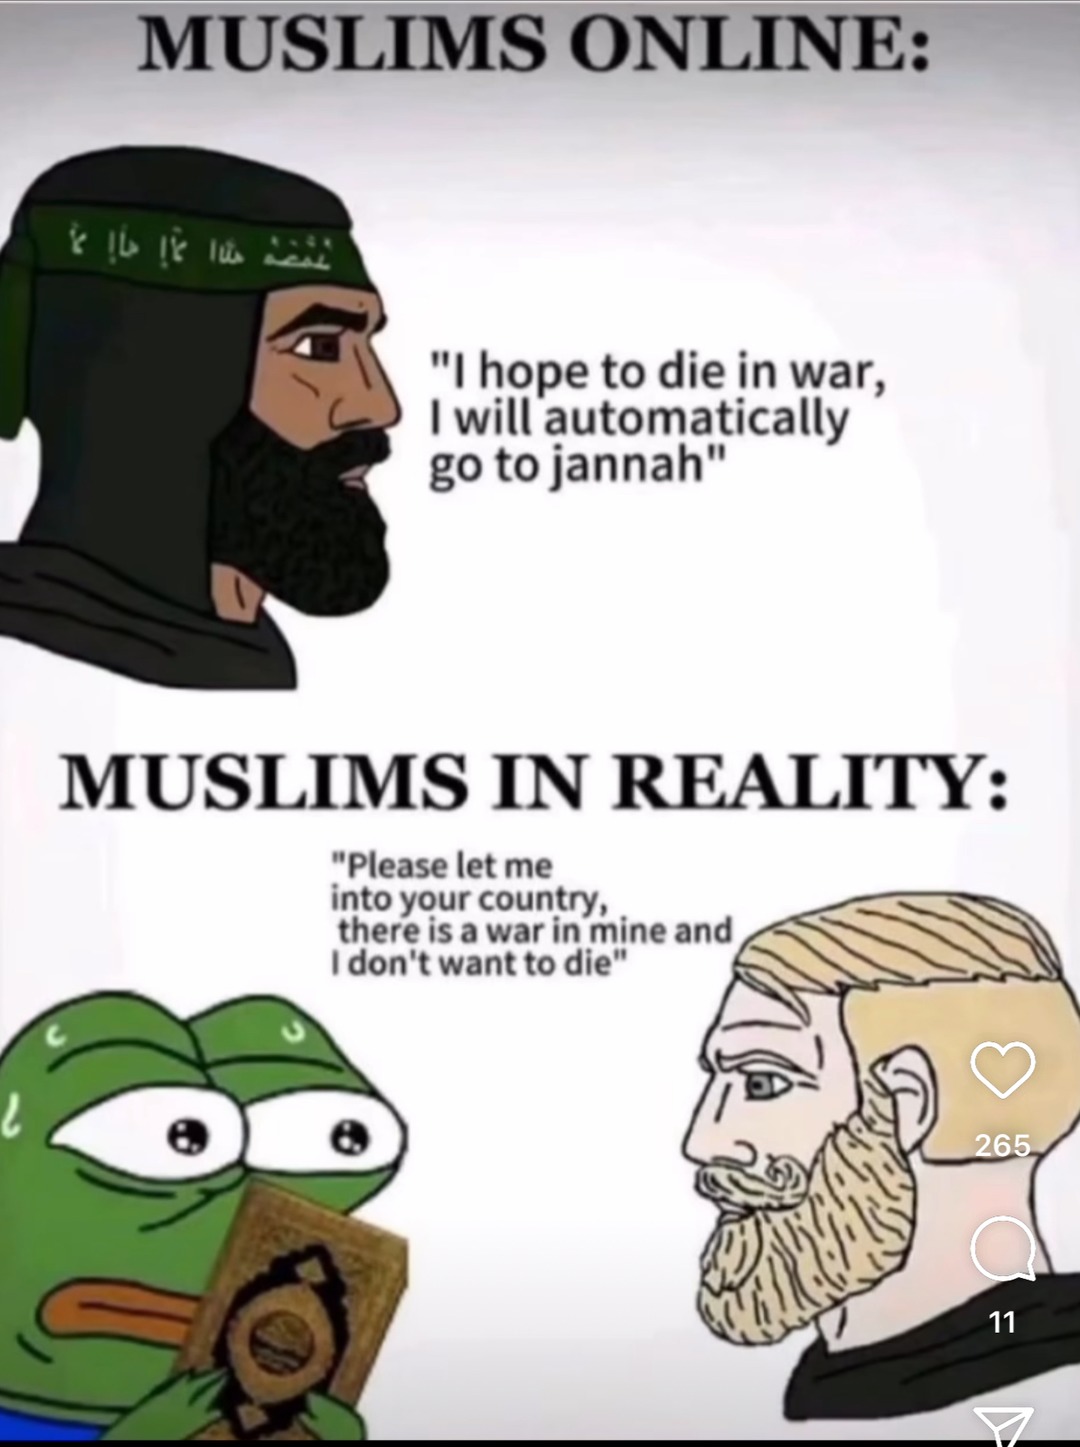 Mohammed was a pdf file - meme